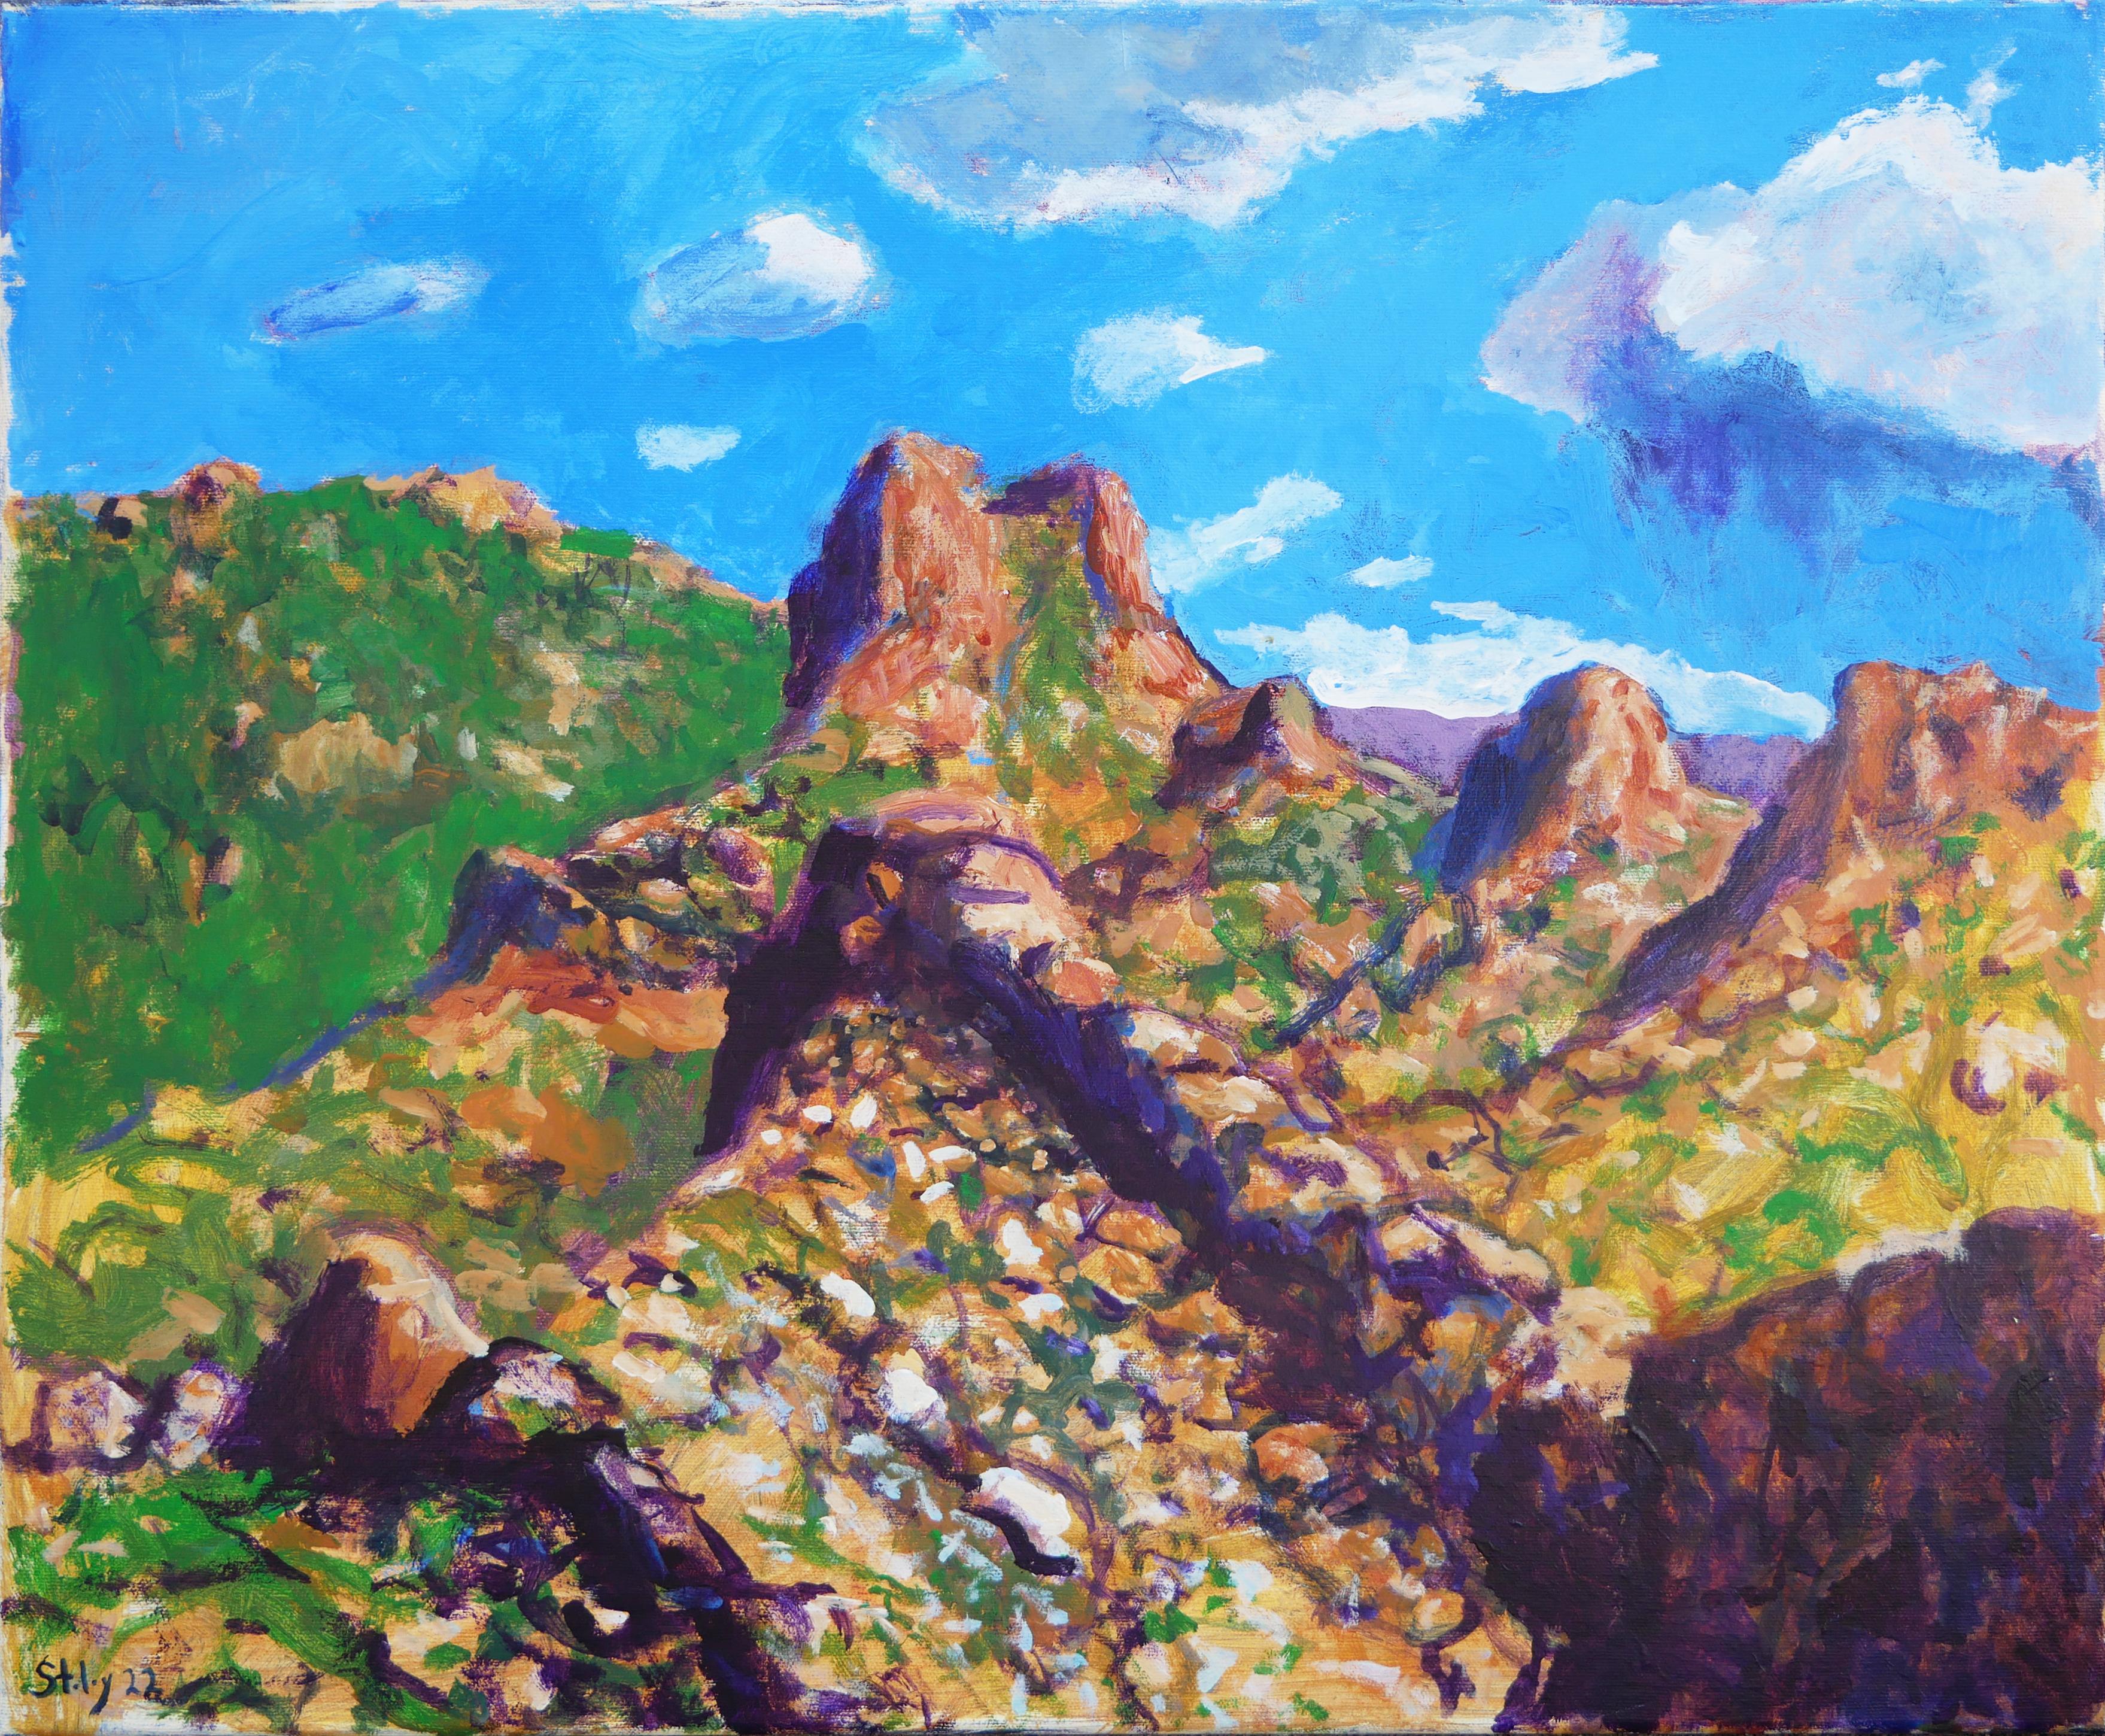 Abstract Painting Earl Staley - "Lava Dikes Big Bend TX" Paysage impressionniste abstrait bleu et marron